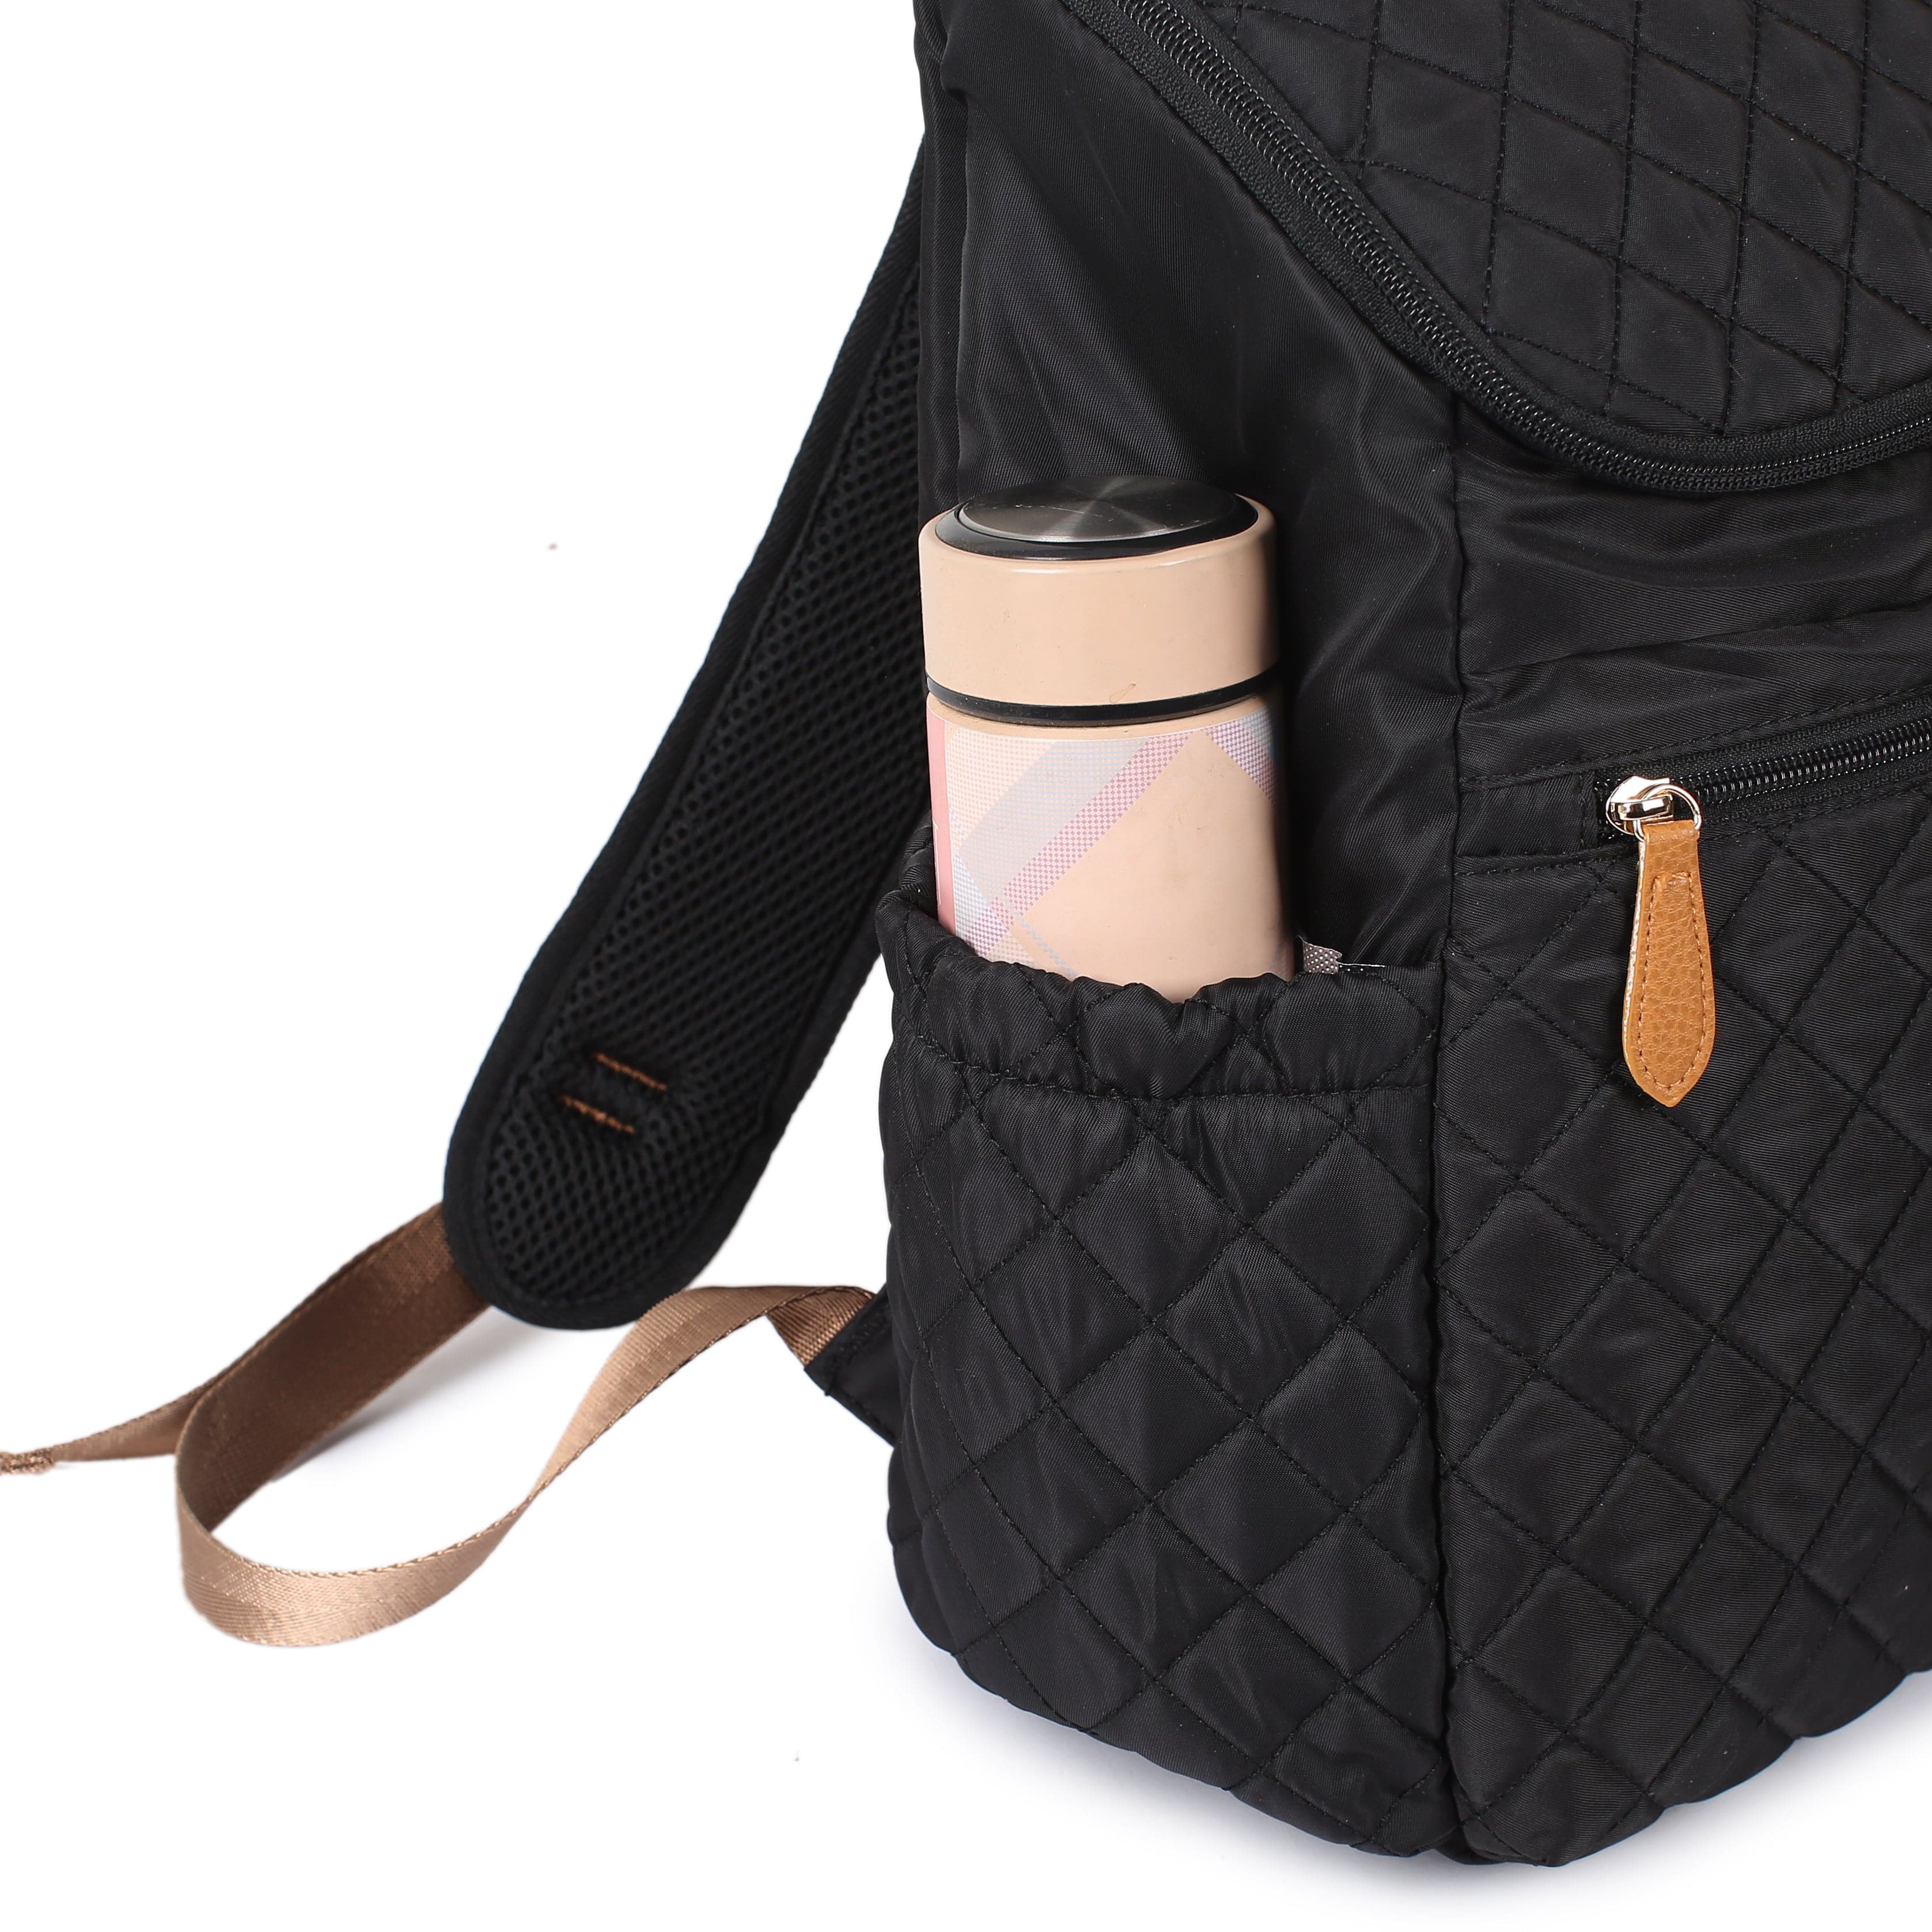 Essential Backpack & Caddy Bundle